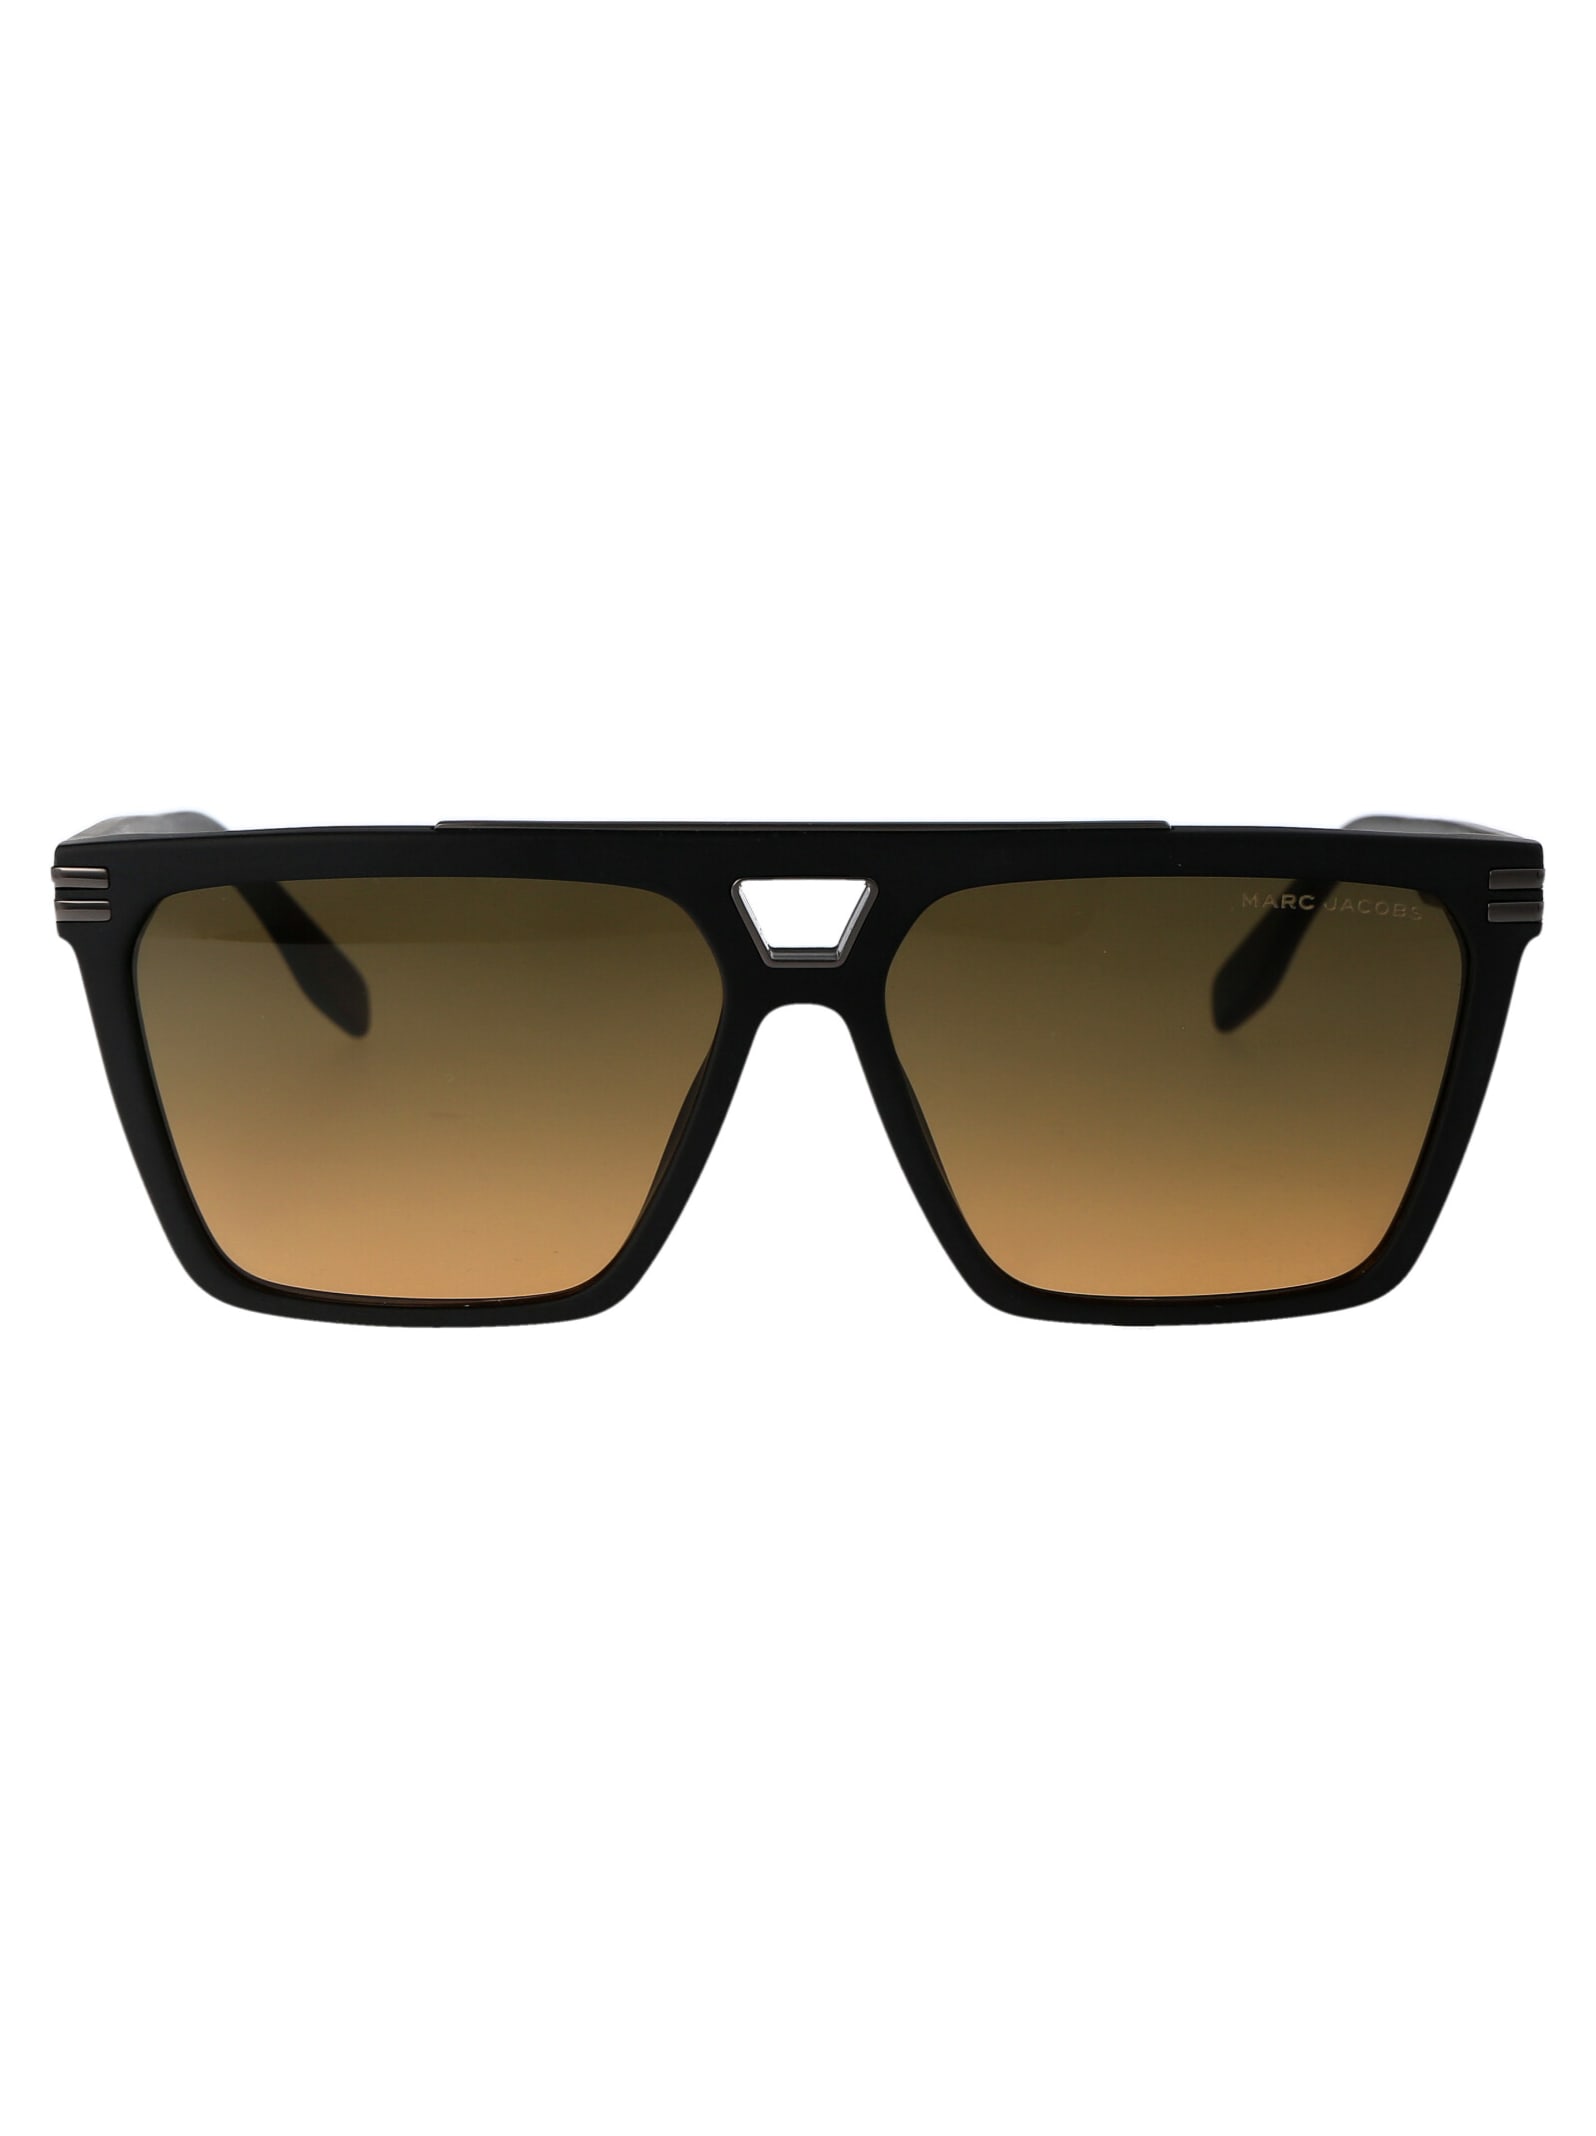 Marc 717/s Sunglasses